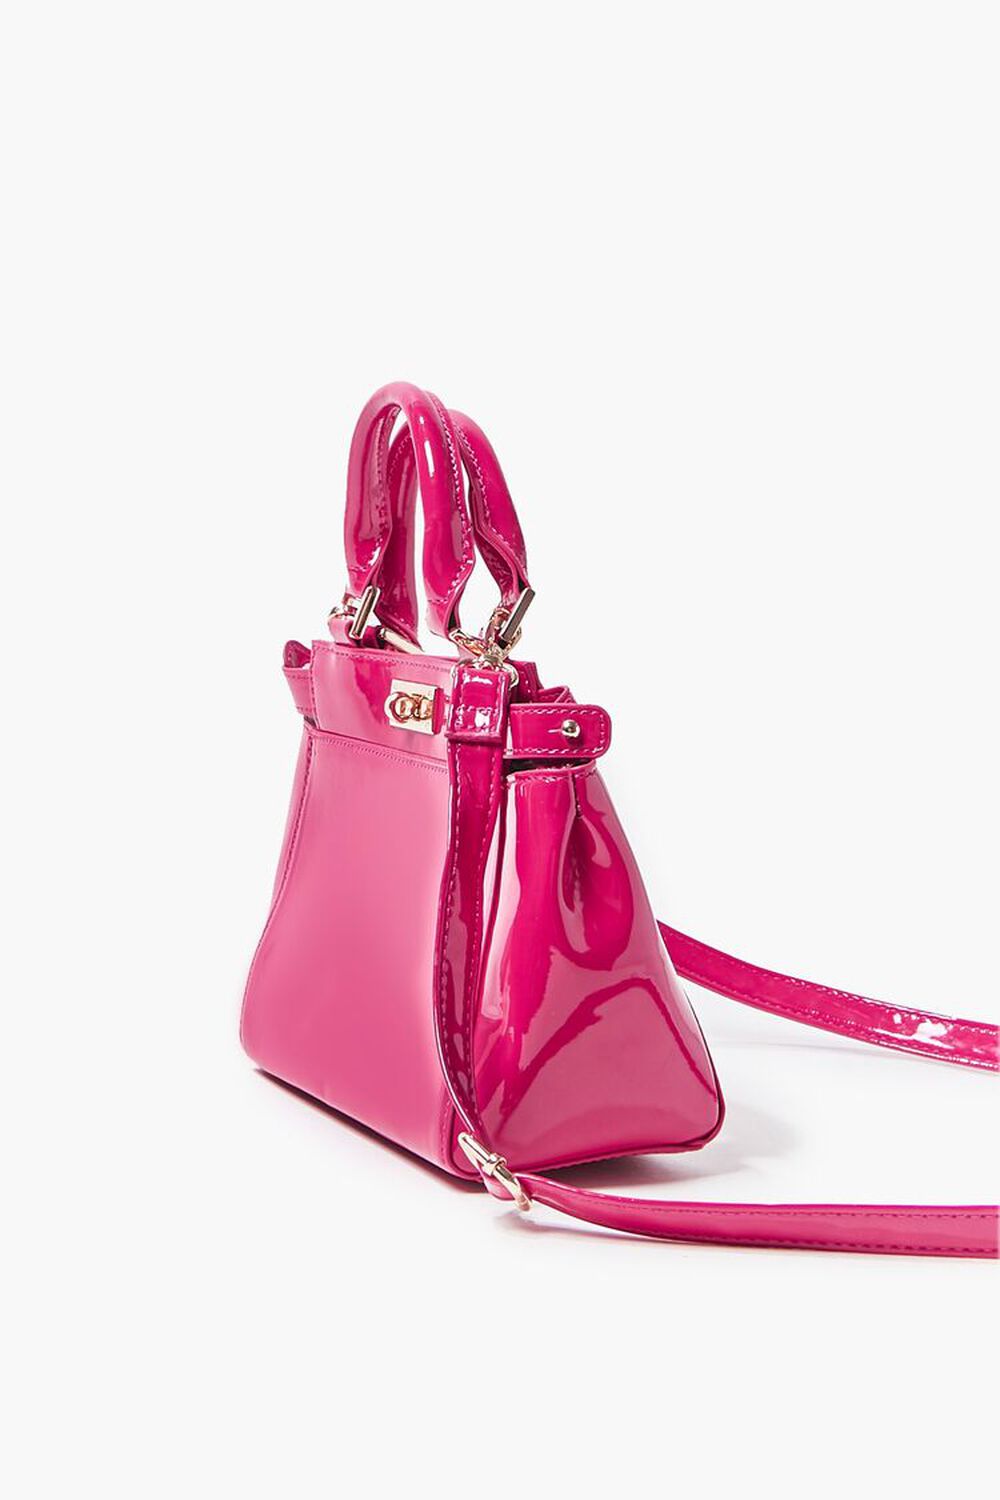 Fauré Le Page Holster Bag - Pink Crossbody Bags, Handbags - FLP20063